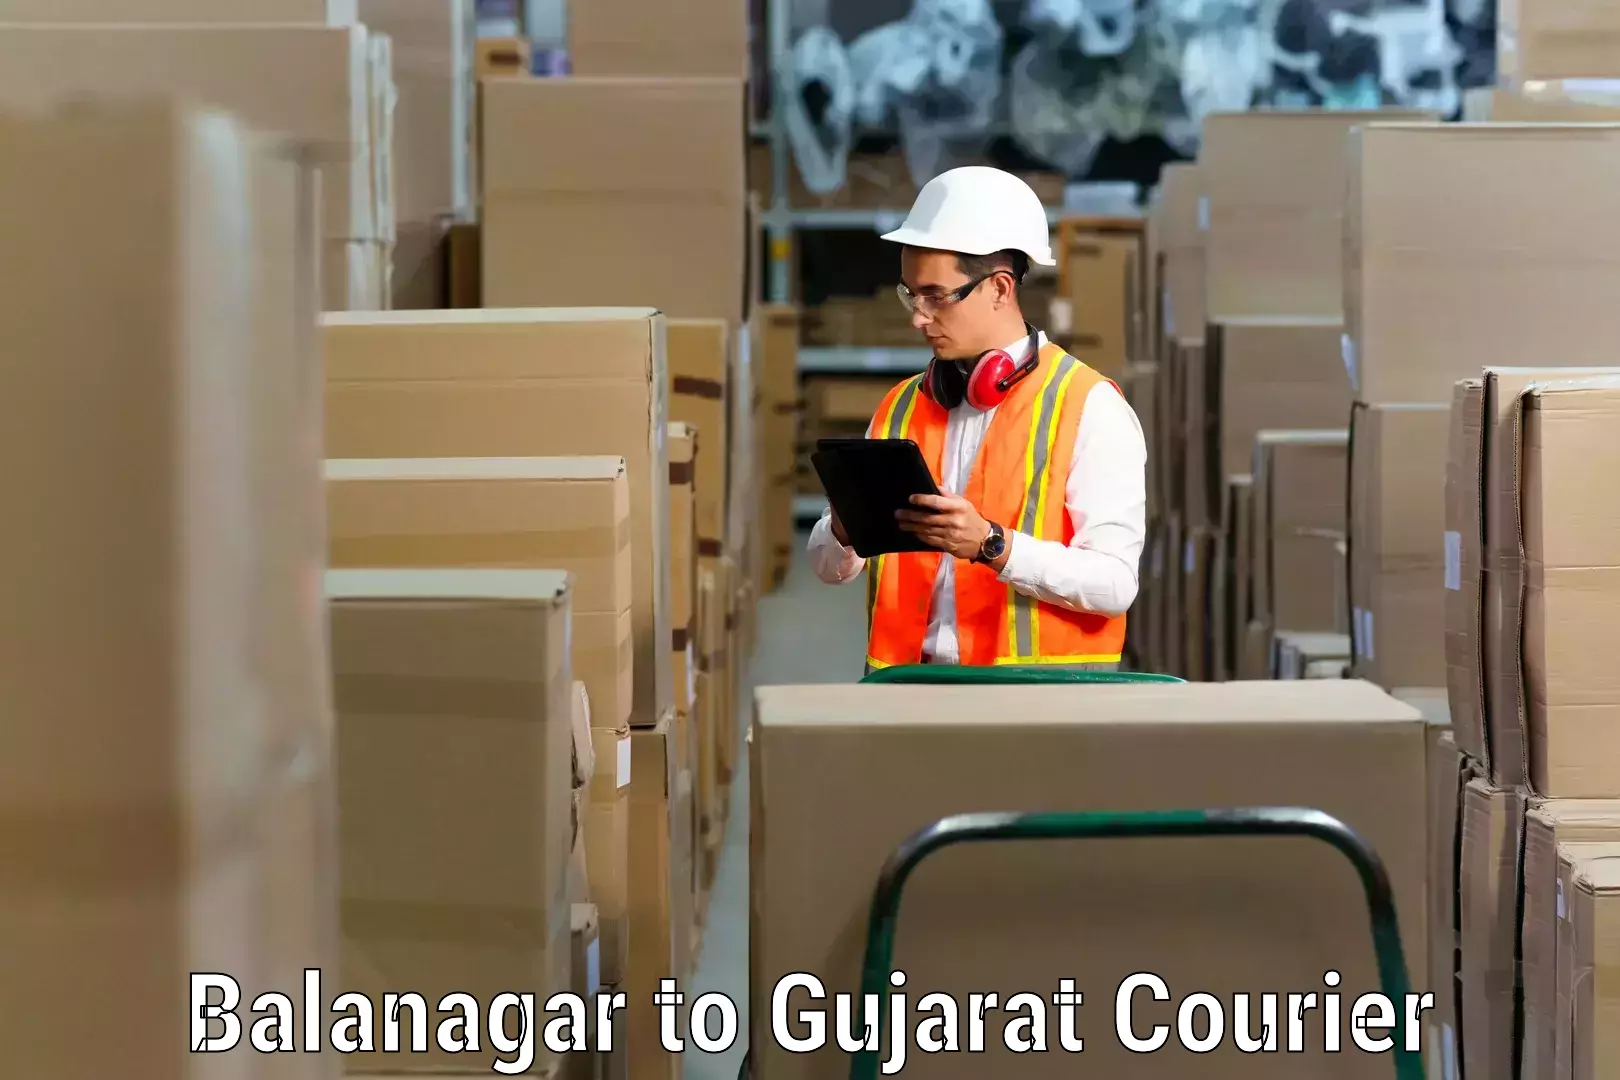 Moving and storage services Balanagar to Gandhinagar